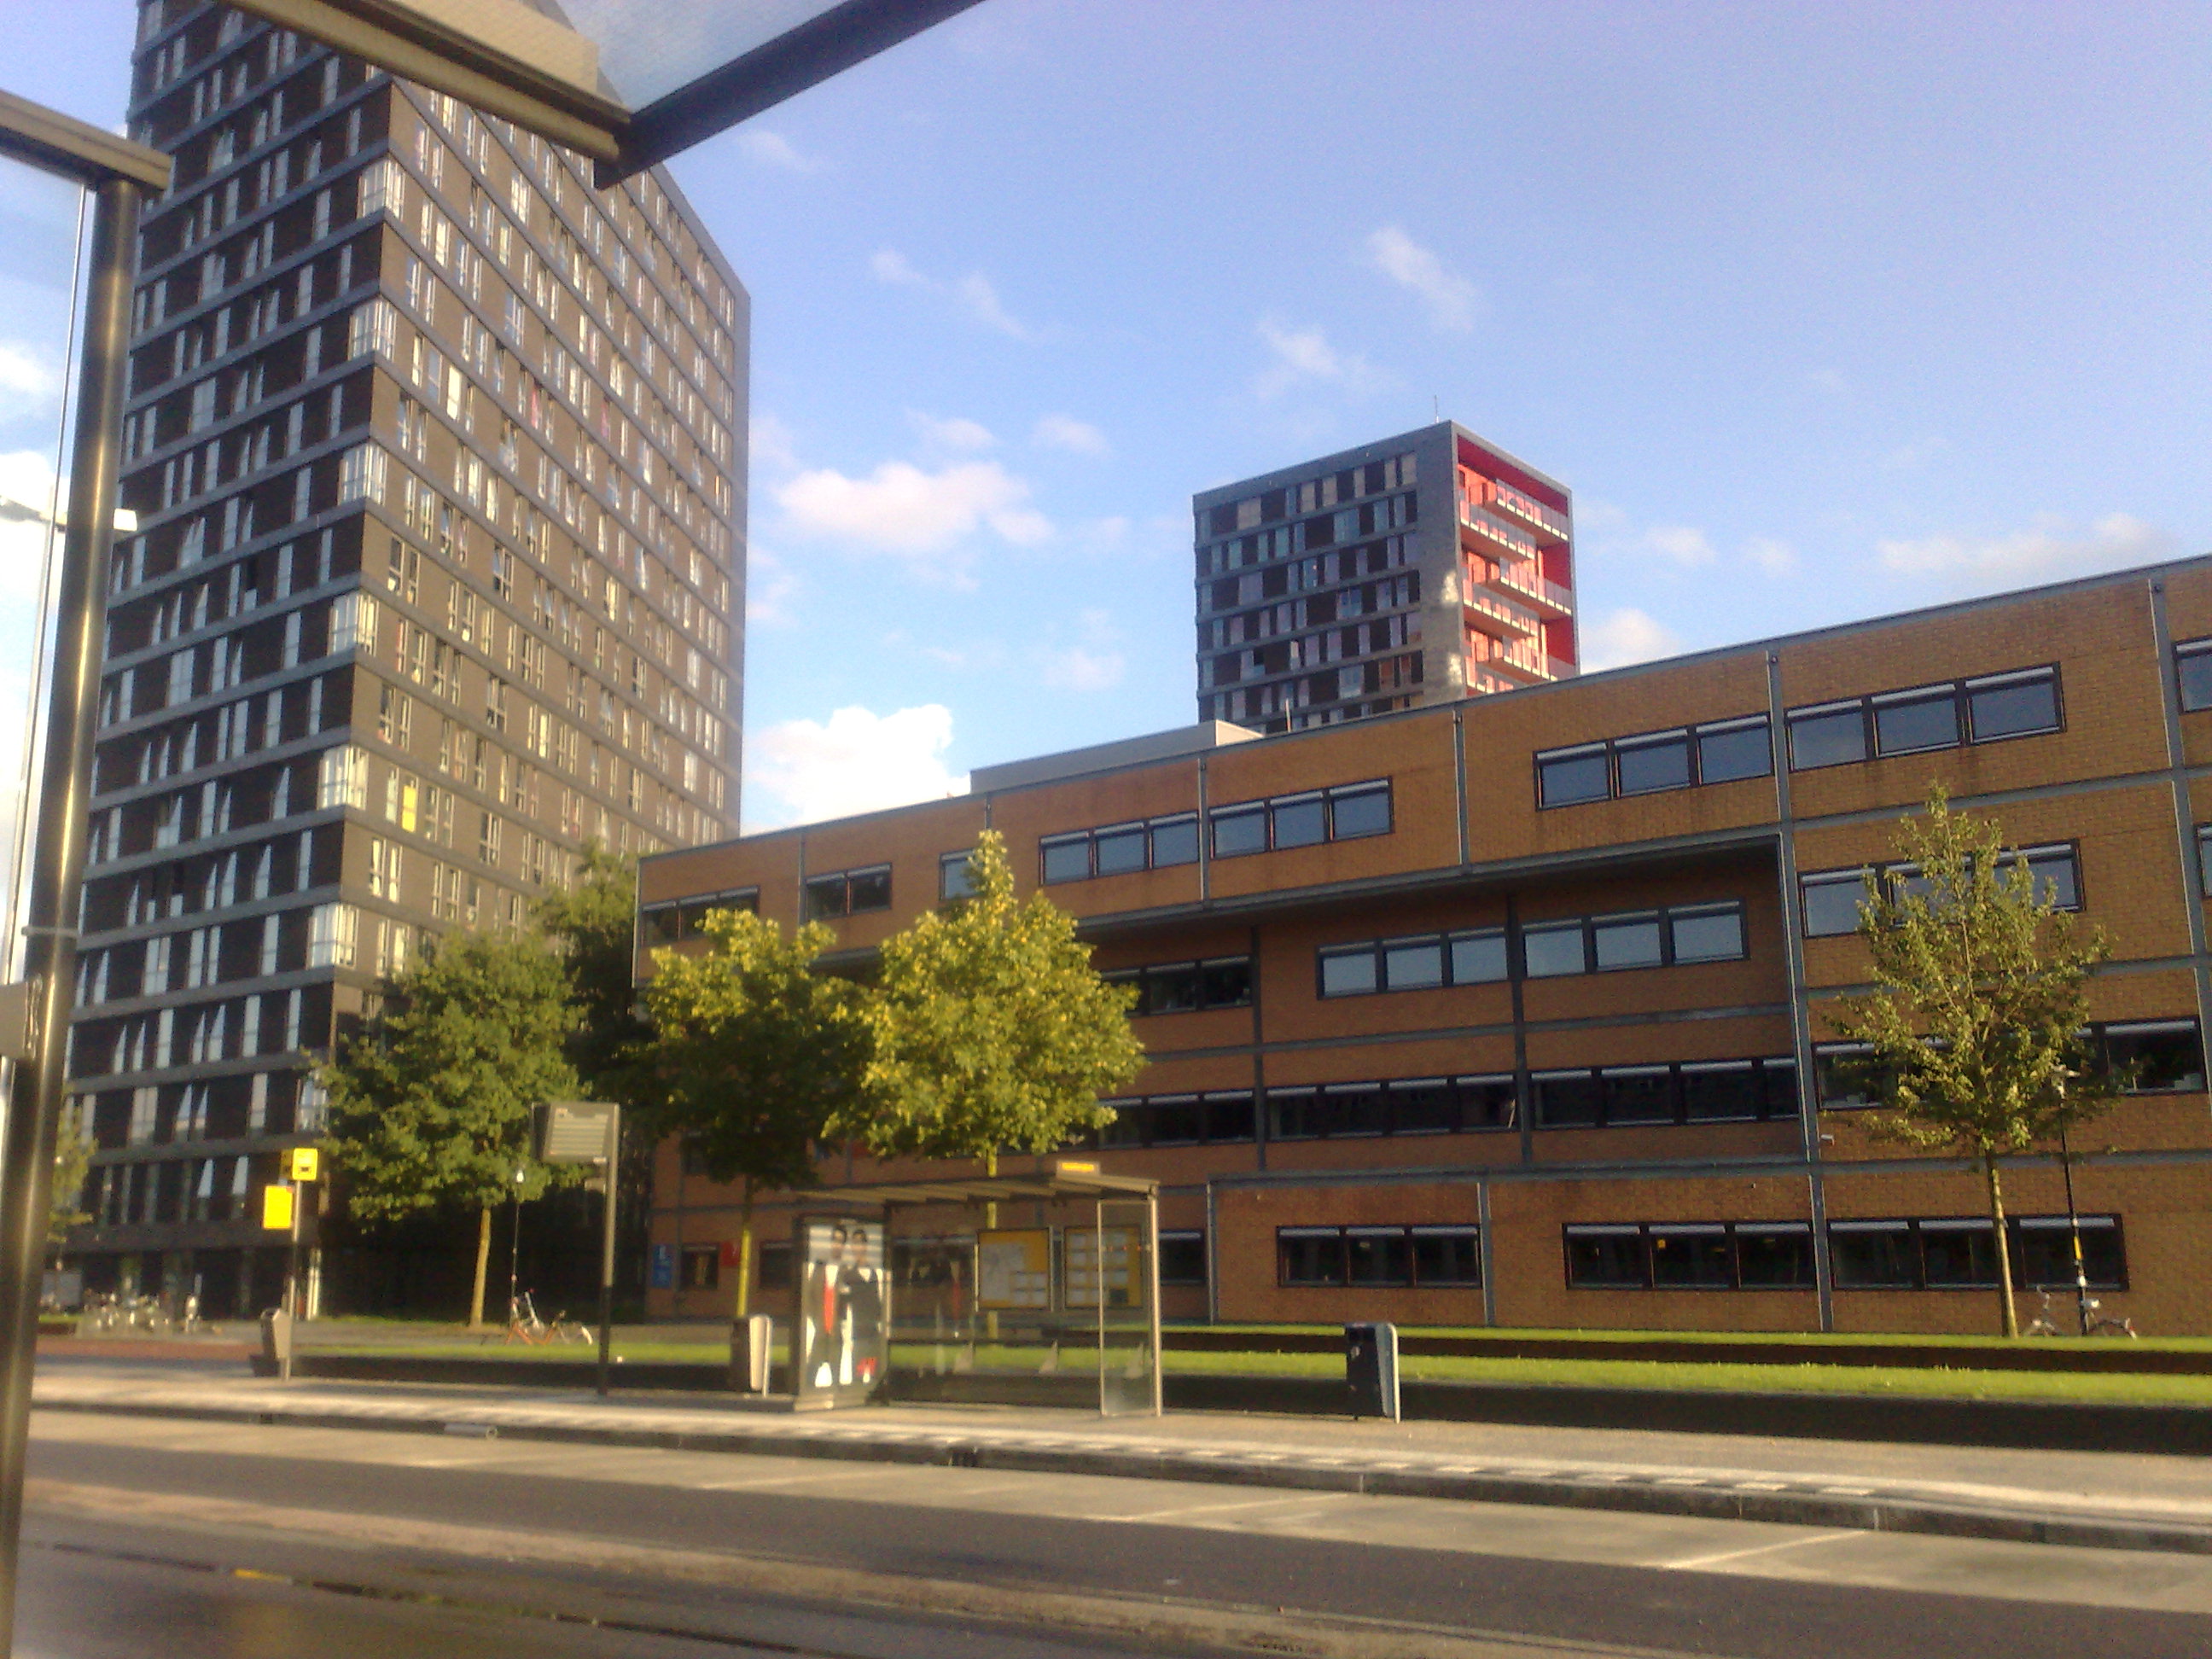 Universiteit Utrecht - 2011-08-28